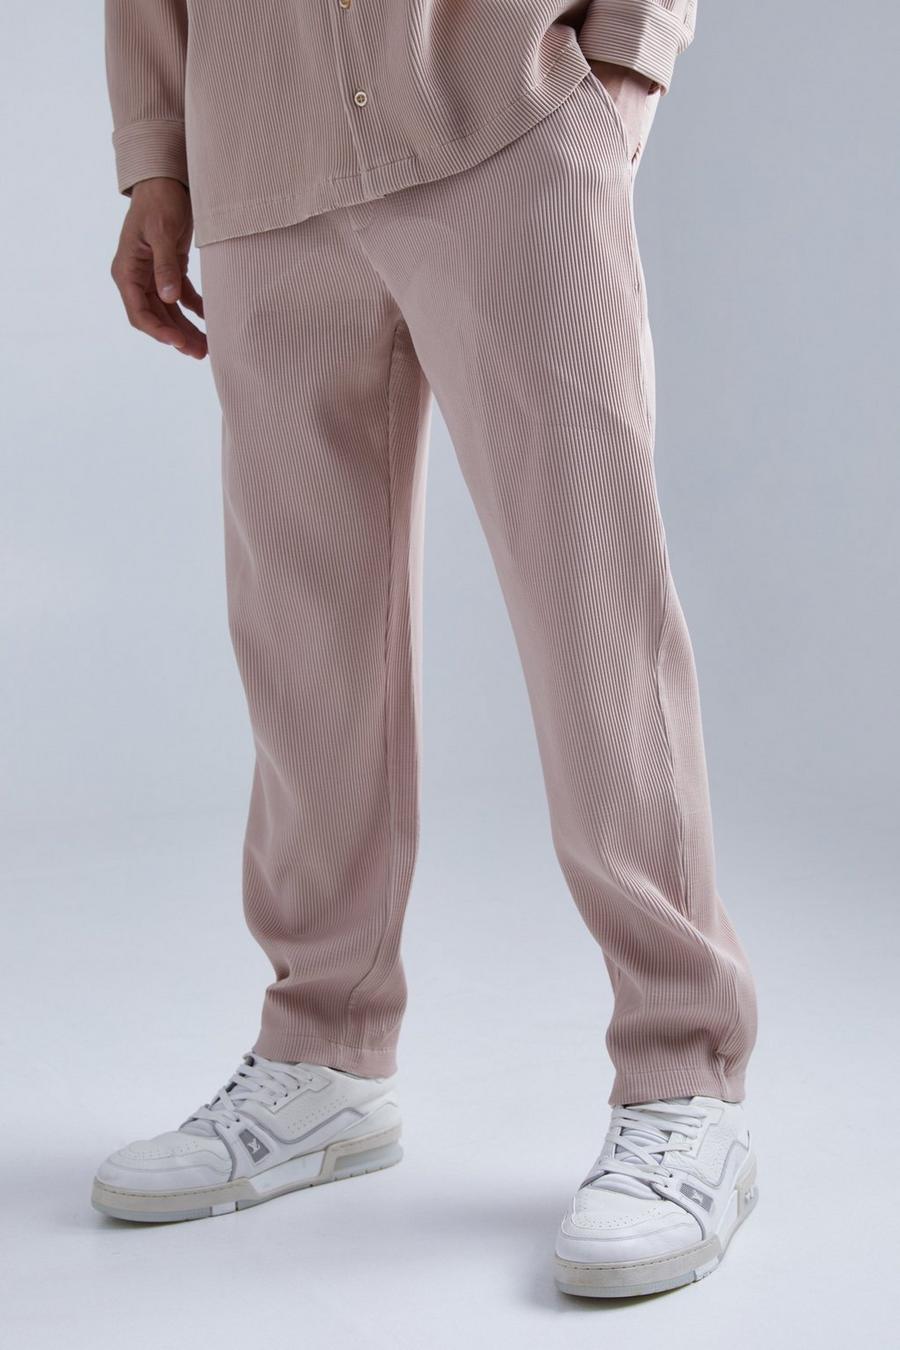 Men Pleated Tapered Pants Elastic Waist Capri Trousers Joggers